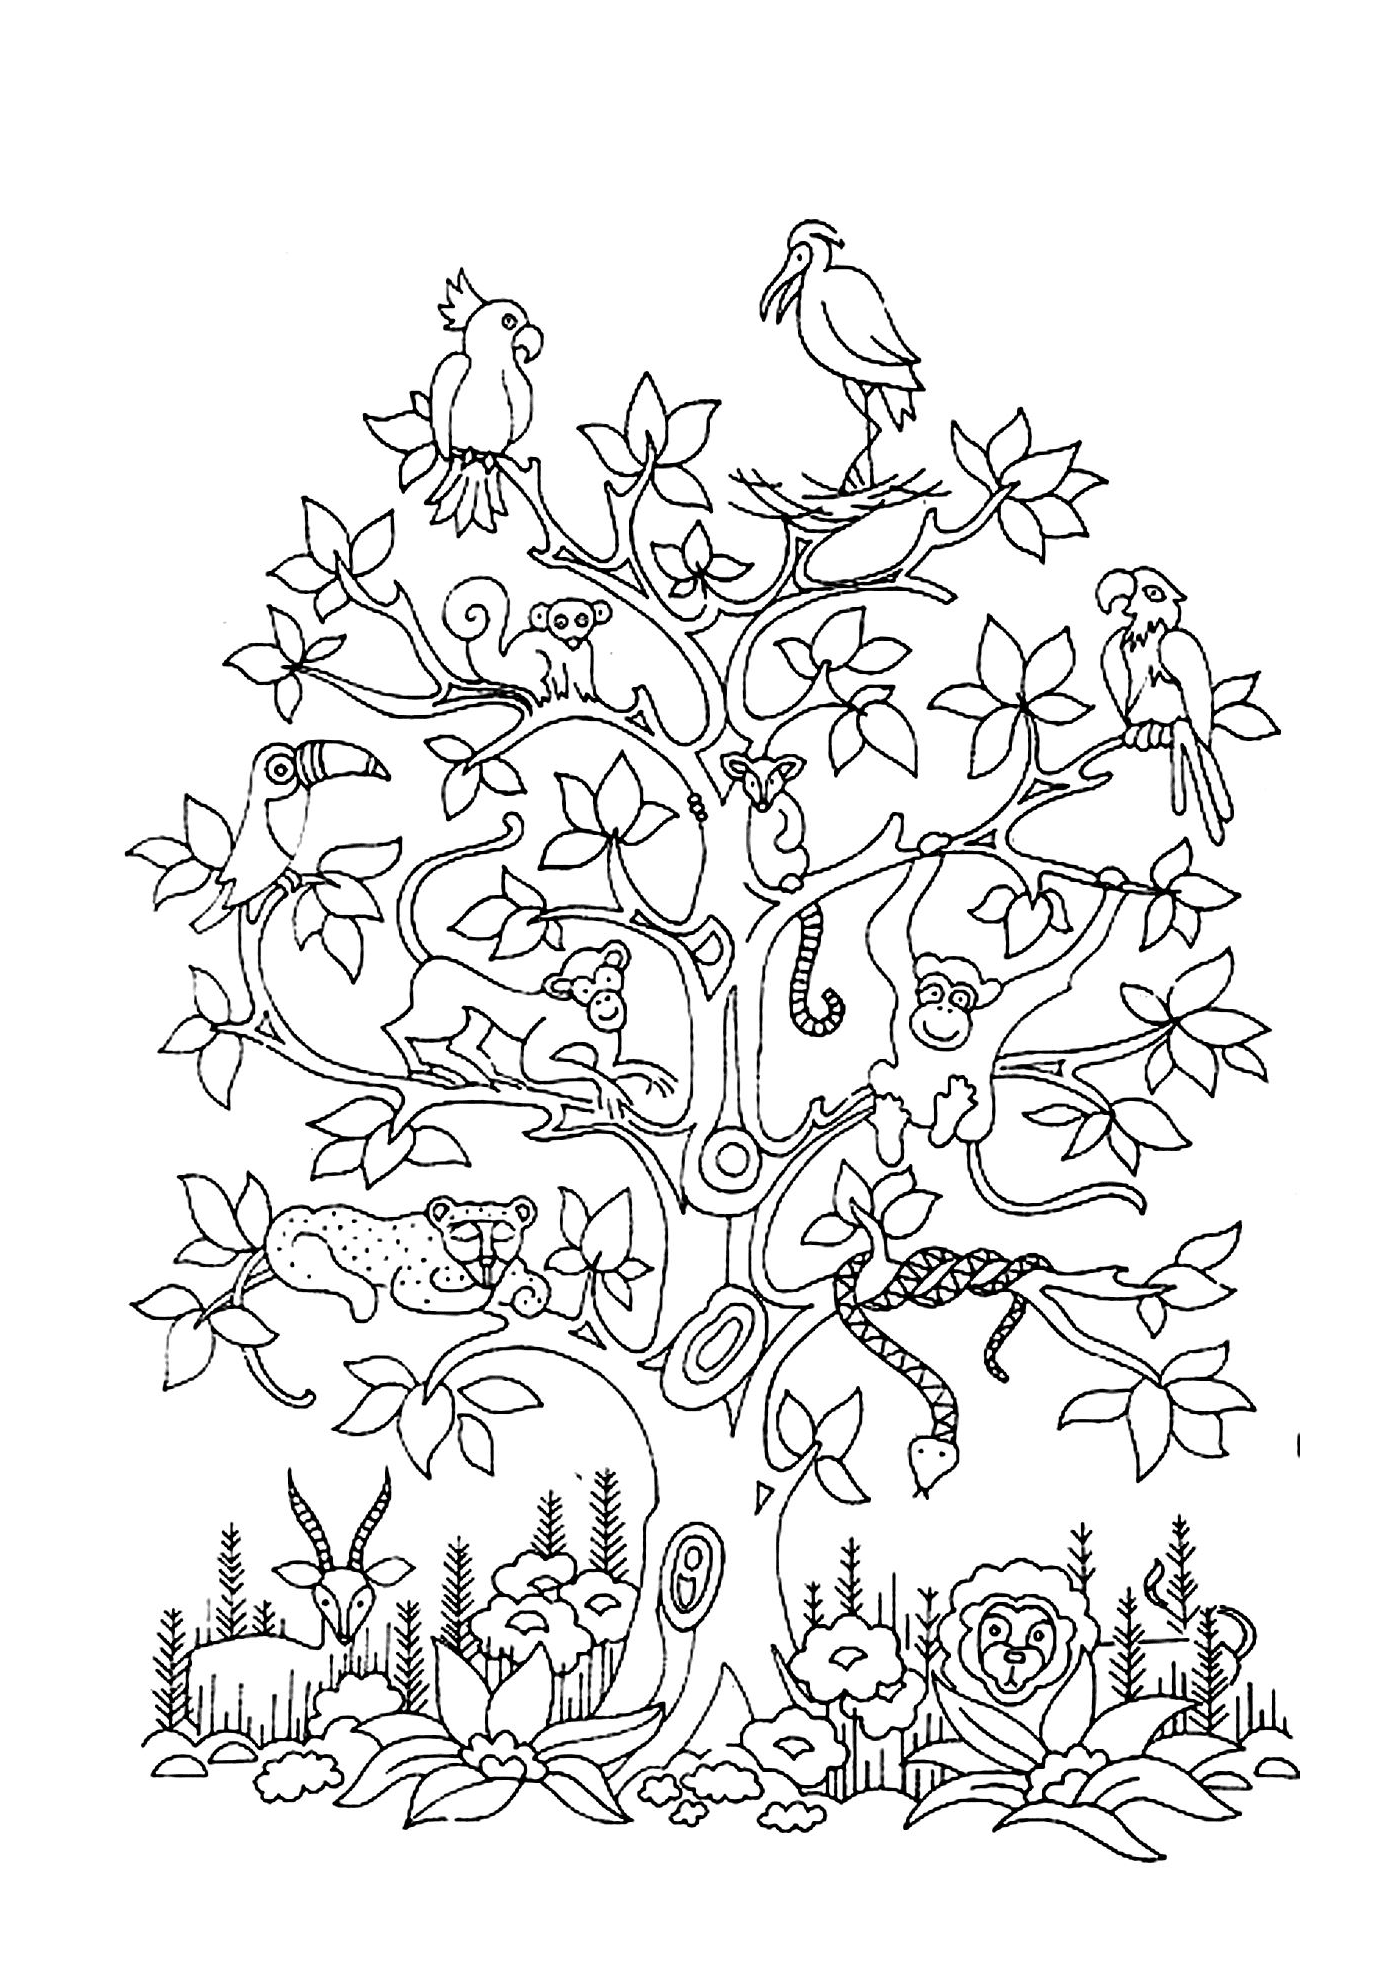  Дерево с птицами 